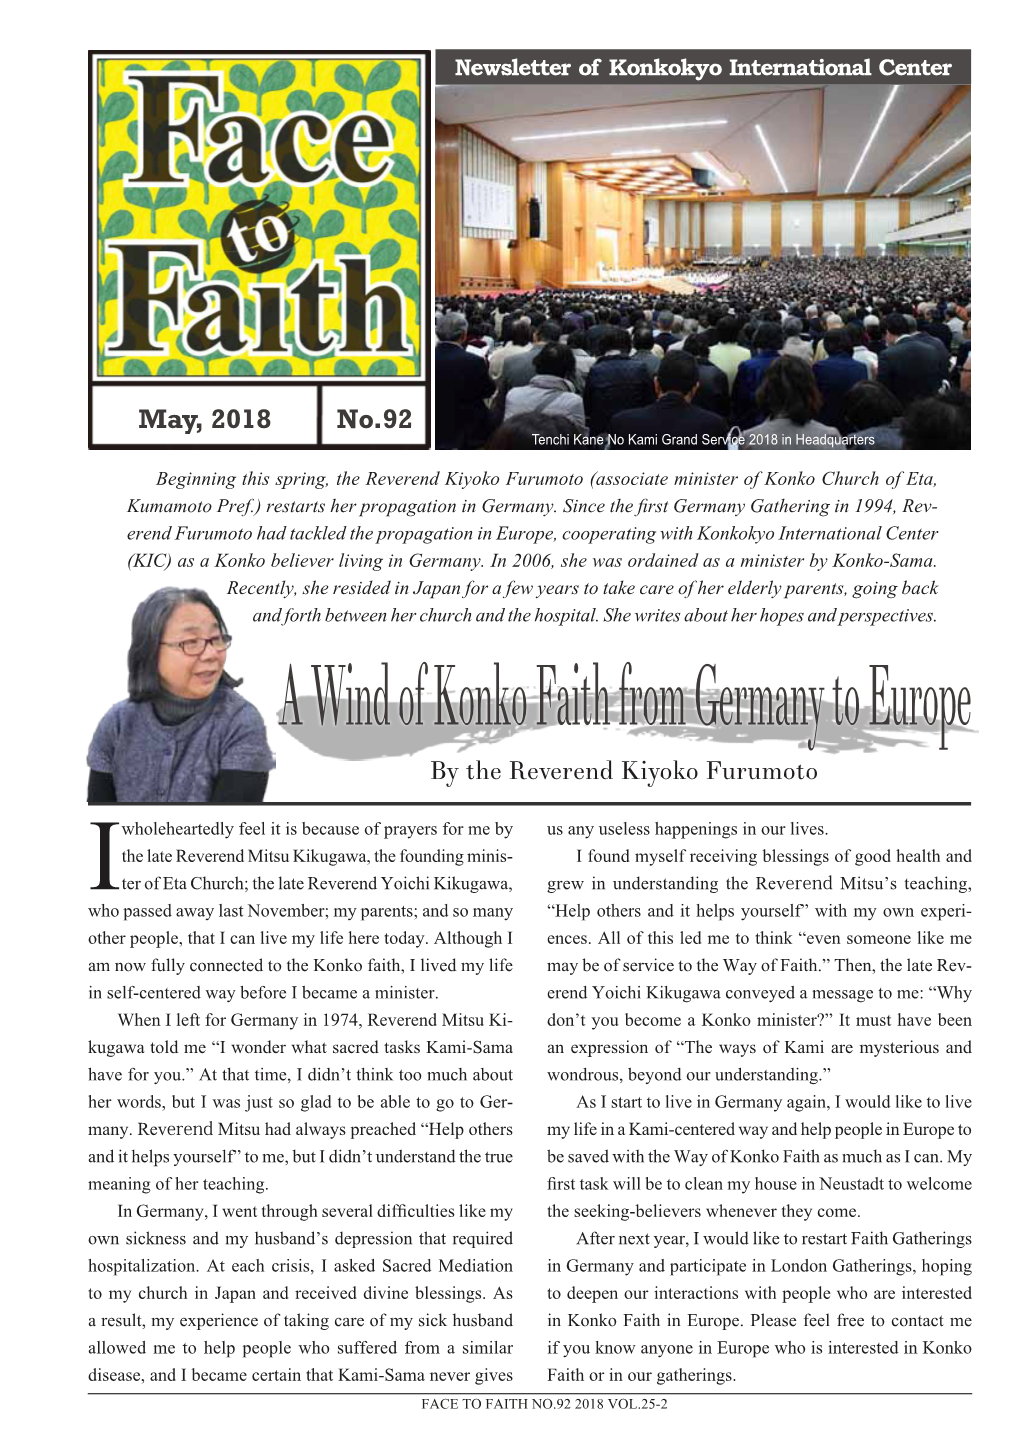 A Wind of Konko Faith from Germany to Europe by the Reverend Kiyoko Furumoto